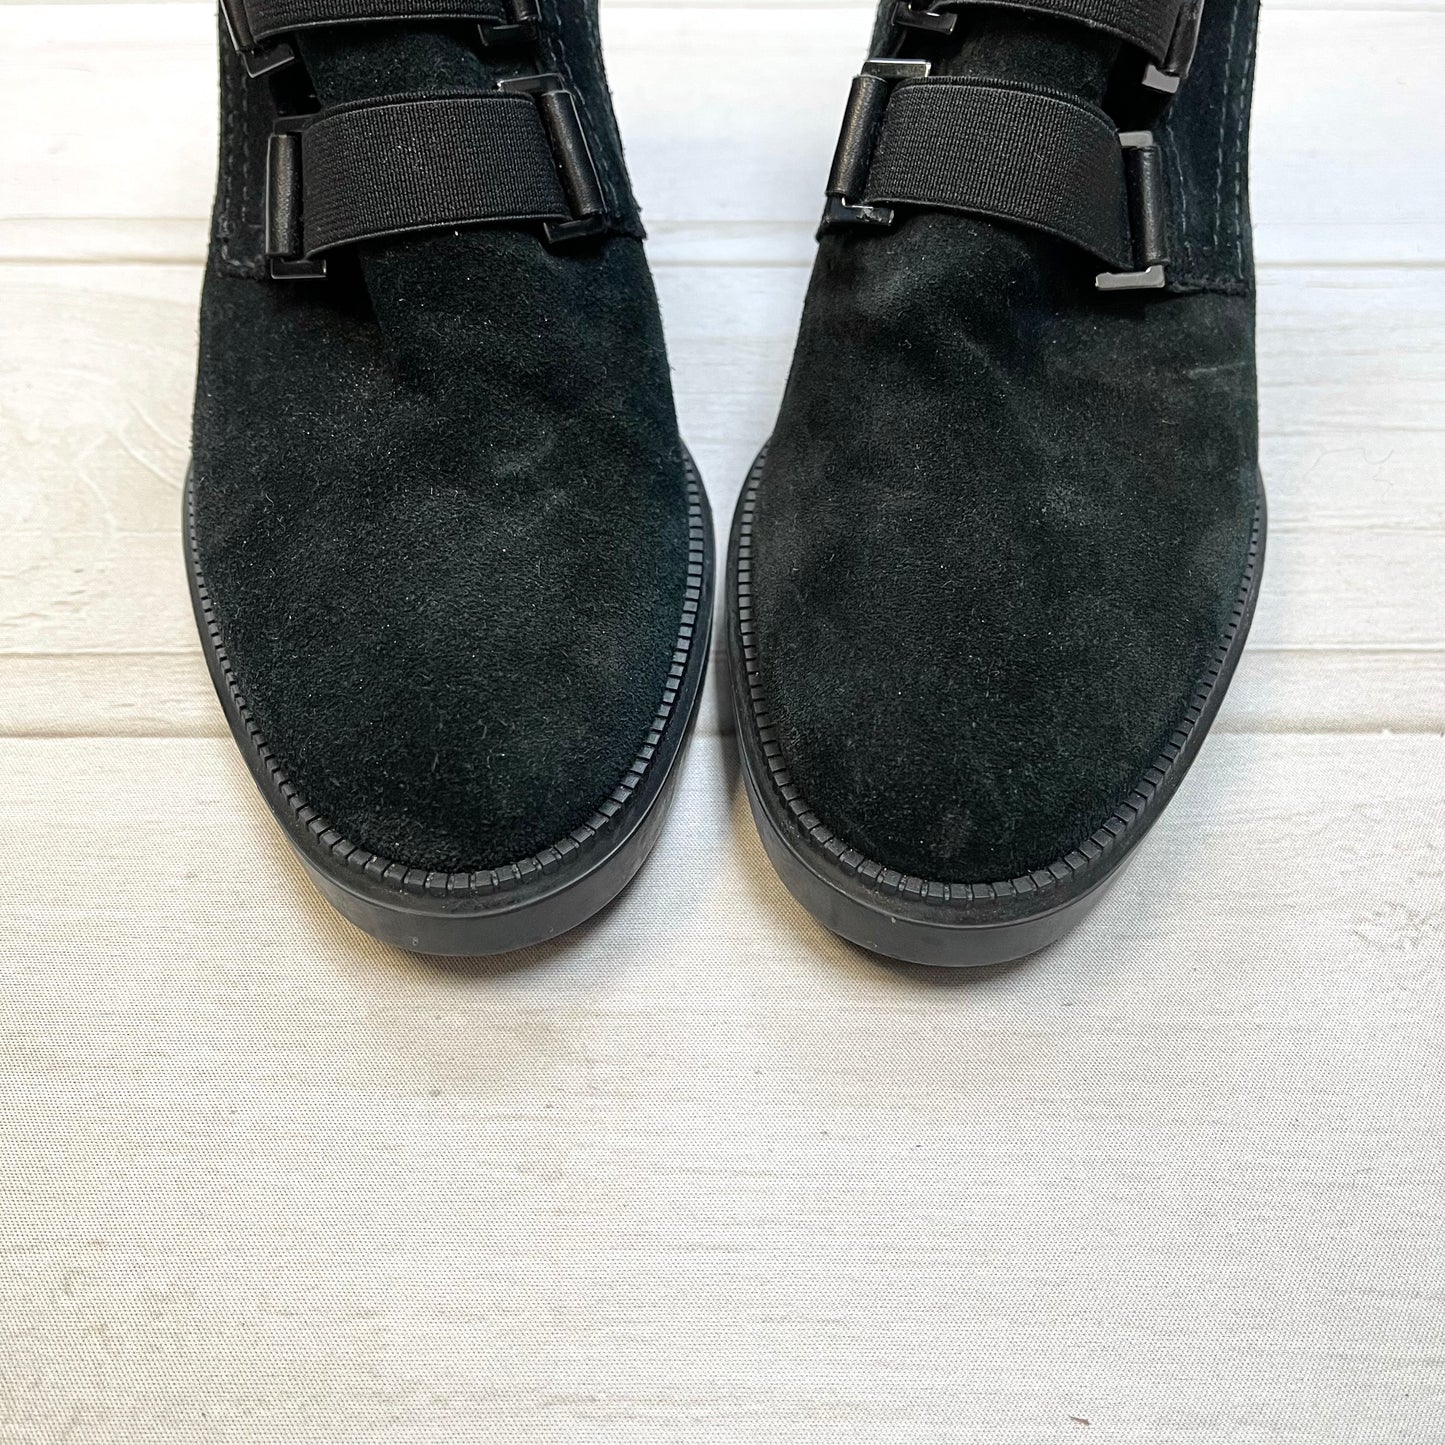 Boots Designer By Aquatalia  Size: 10